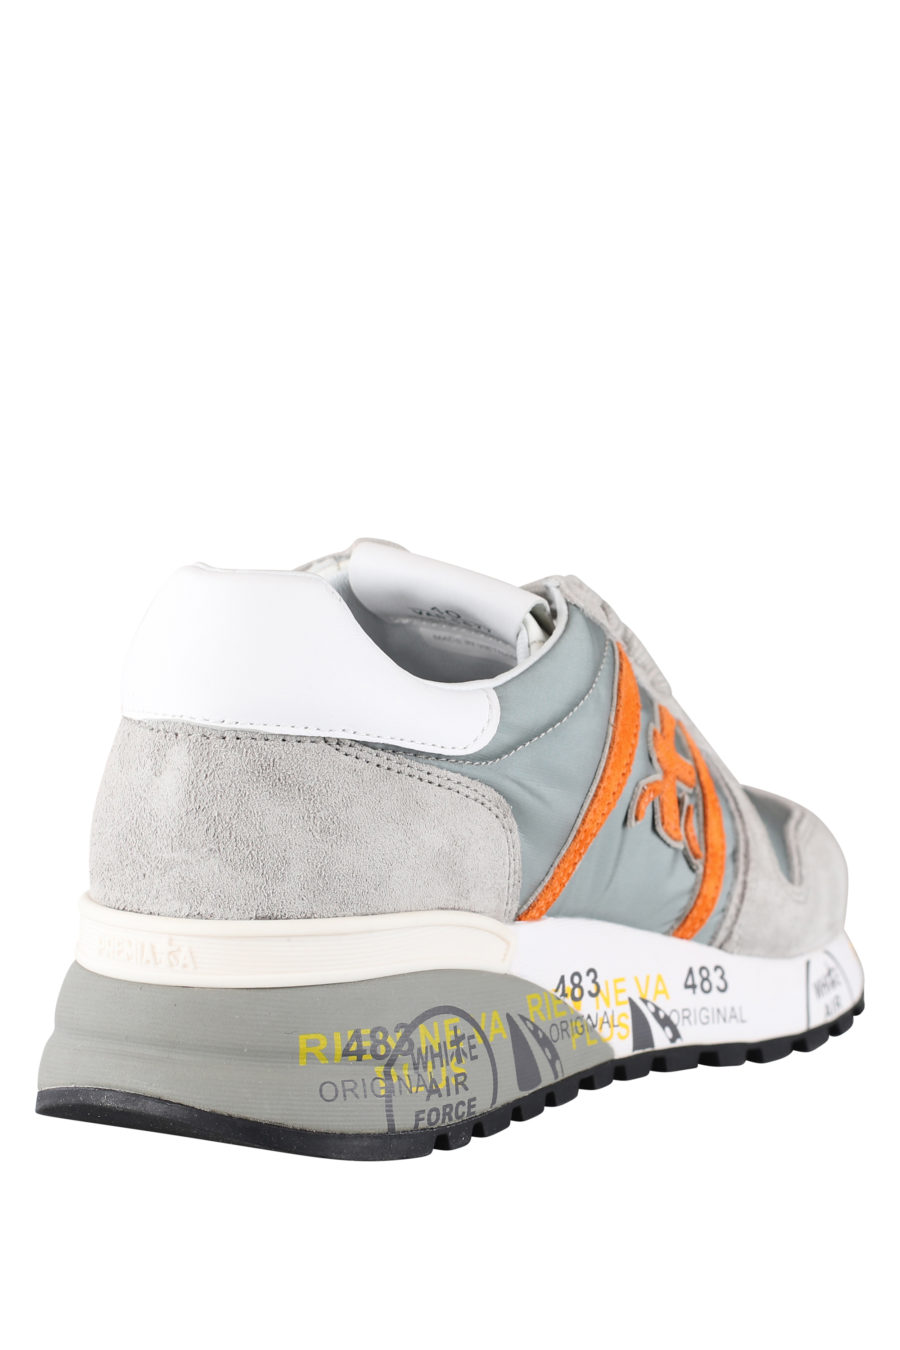 Zapatillas grises con detalles naranja "Lander" - IMG 9621